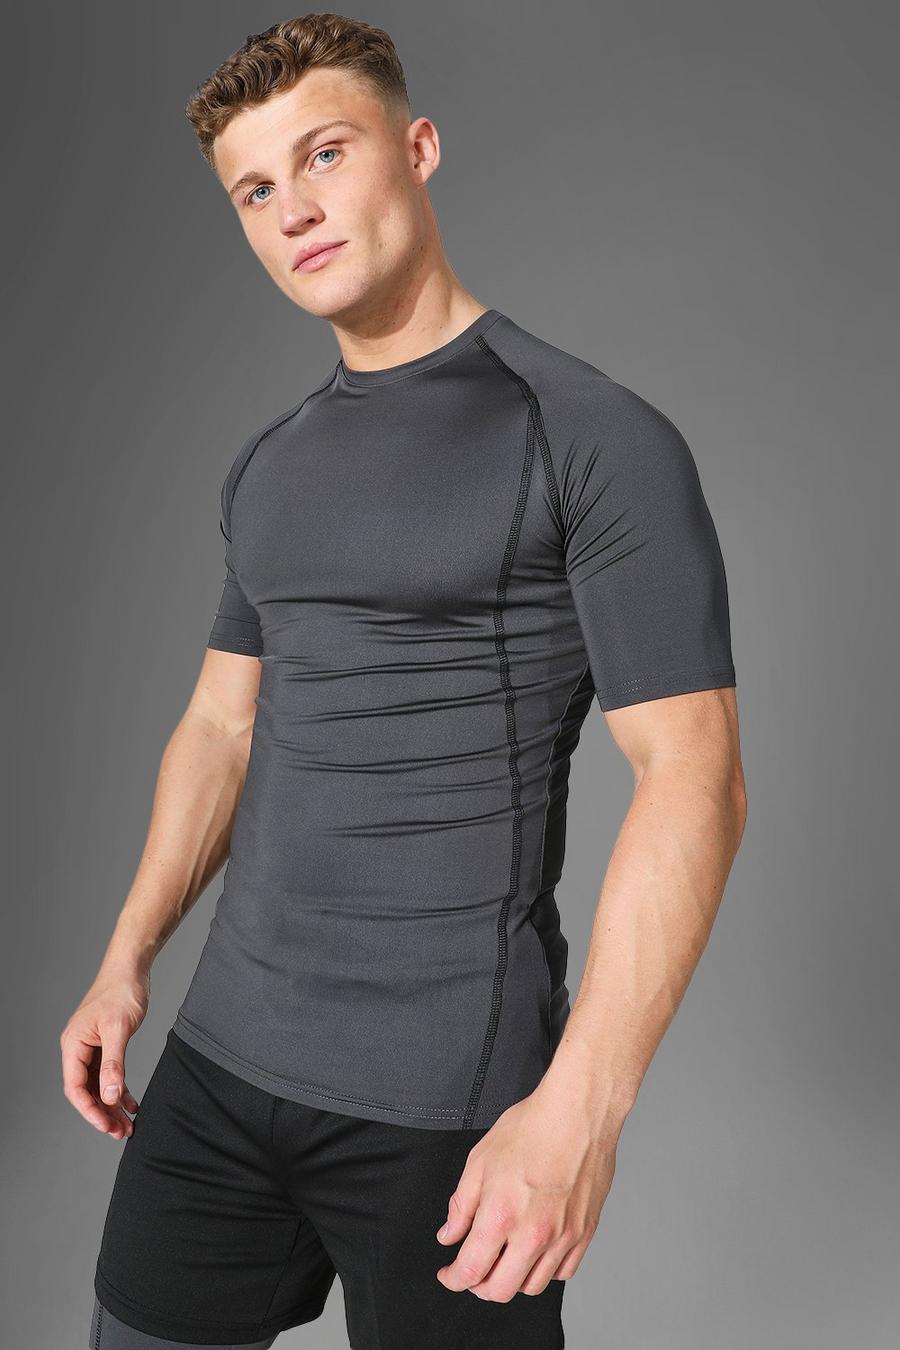 Charcoal gris Man Active Gym Contrast Compression T Shirt image number 1